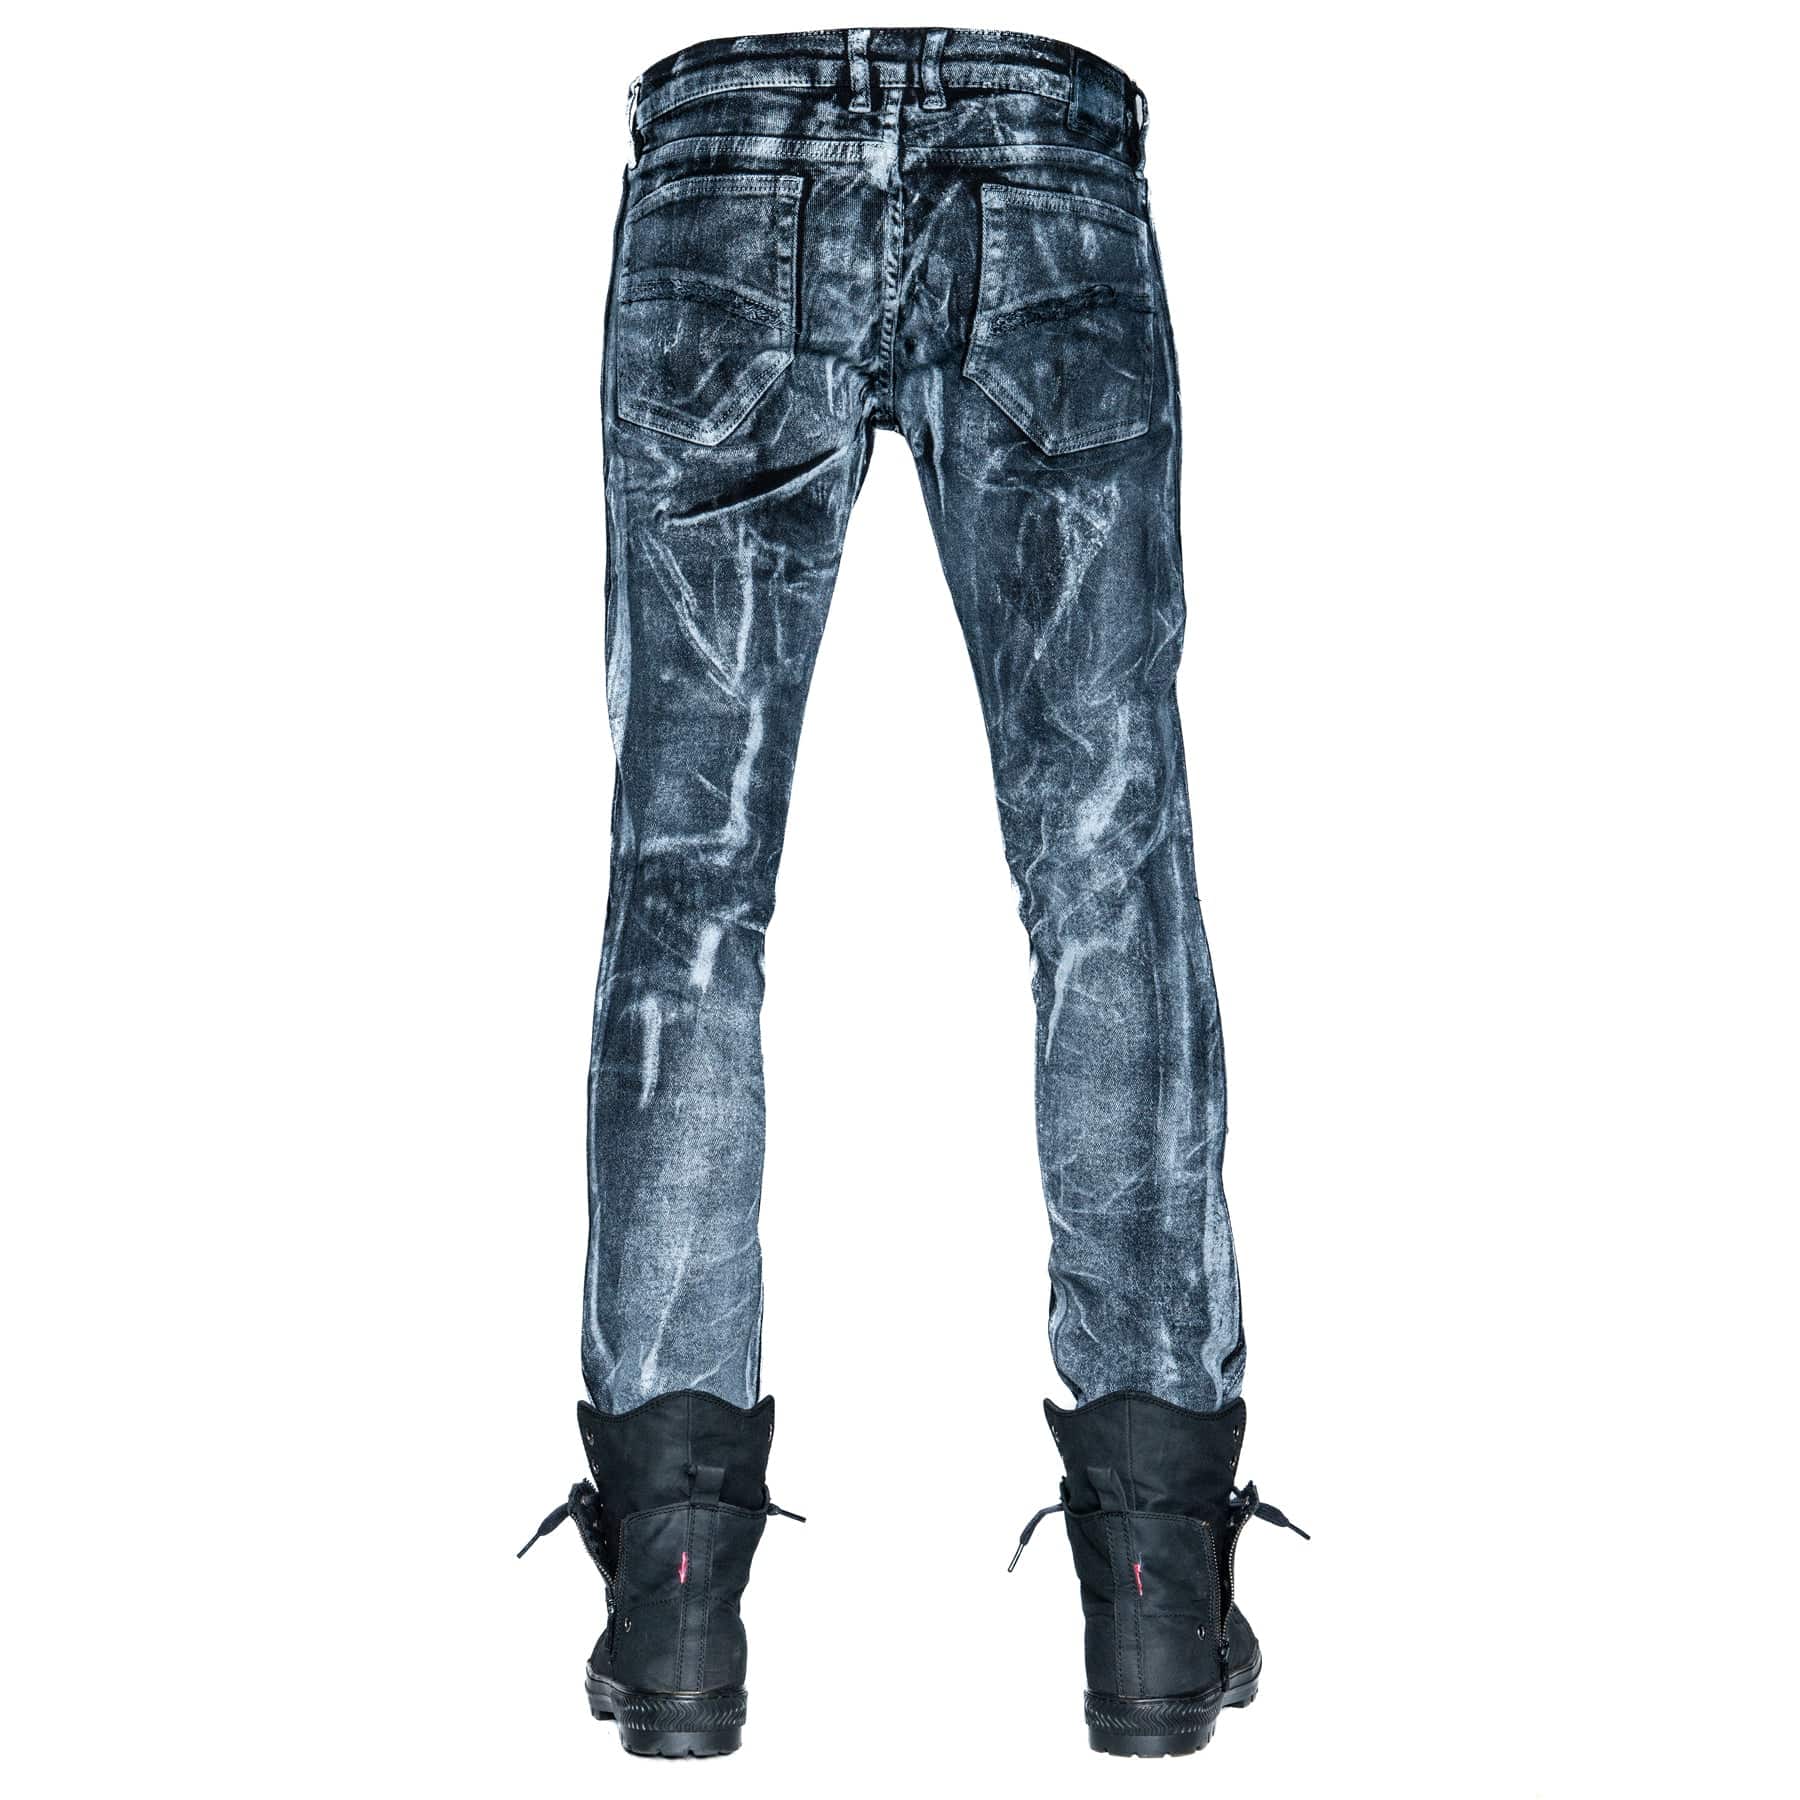 Custom Chop Shop Pants Wornstar Custom Jeans - White Pearl Alloy Wash - Slim Fit Shredded